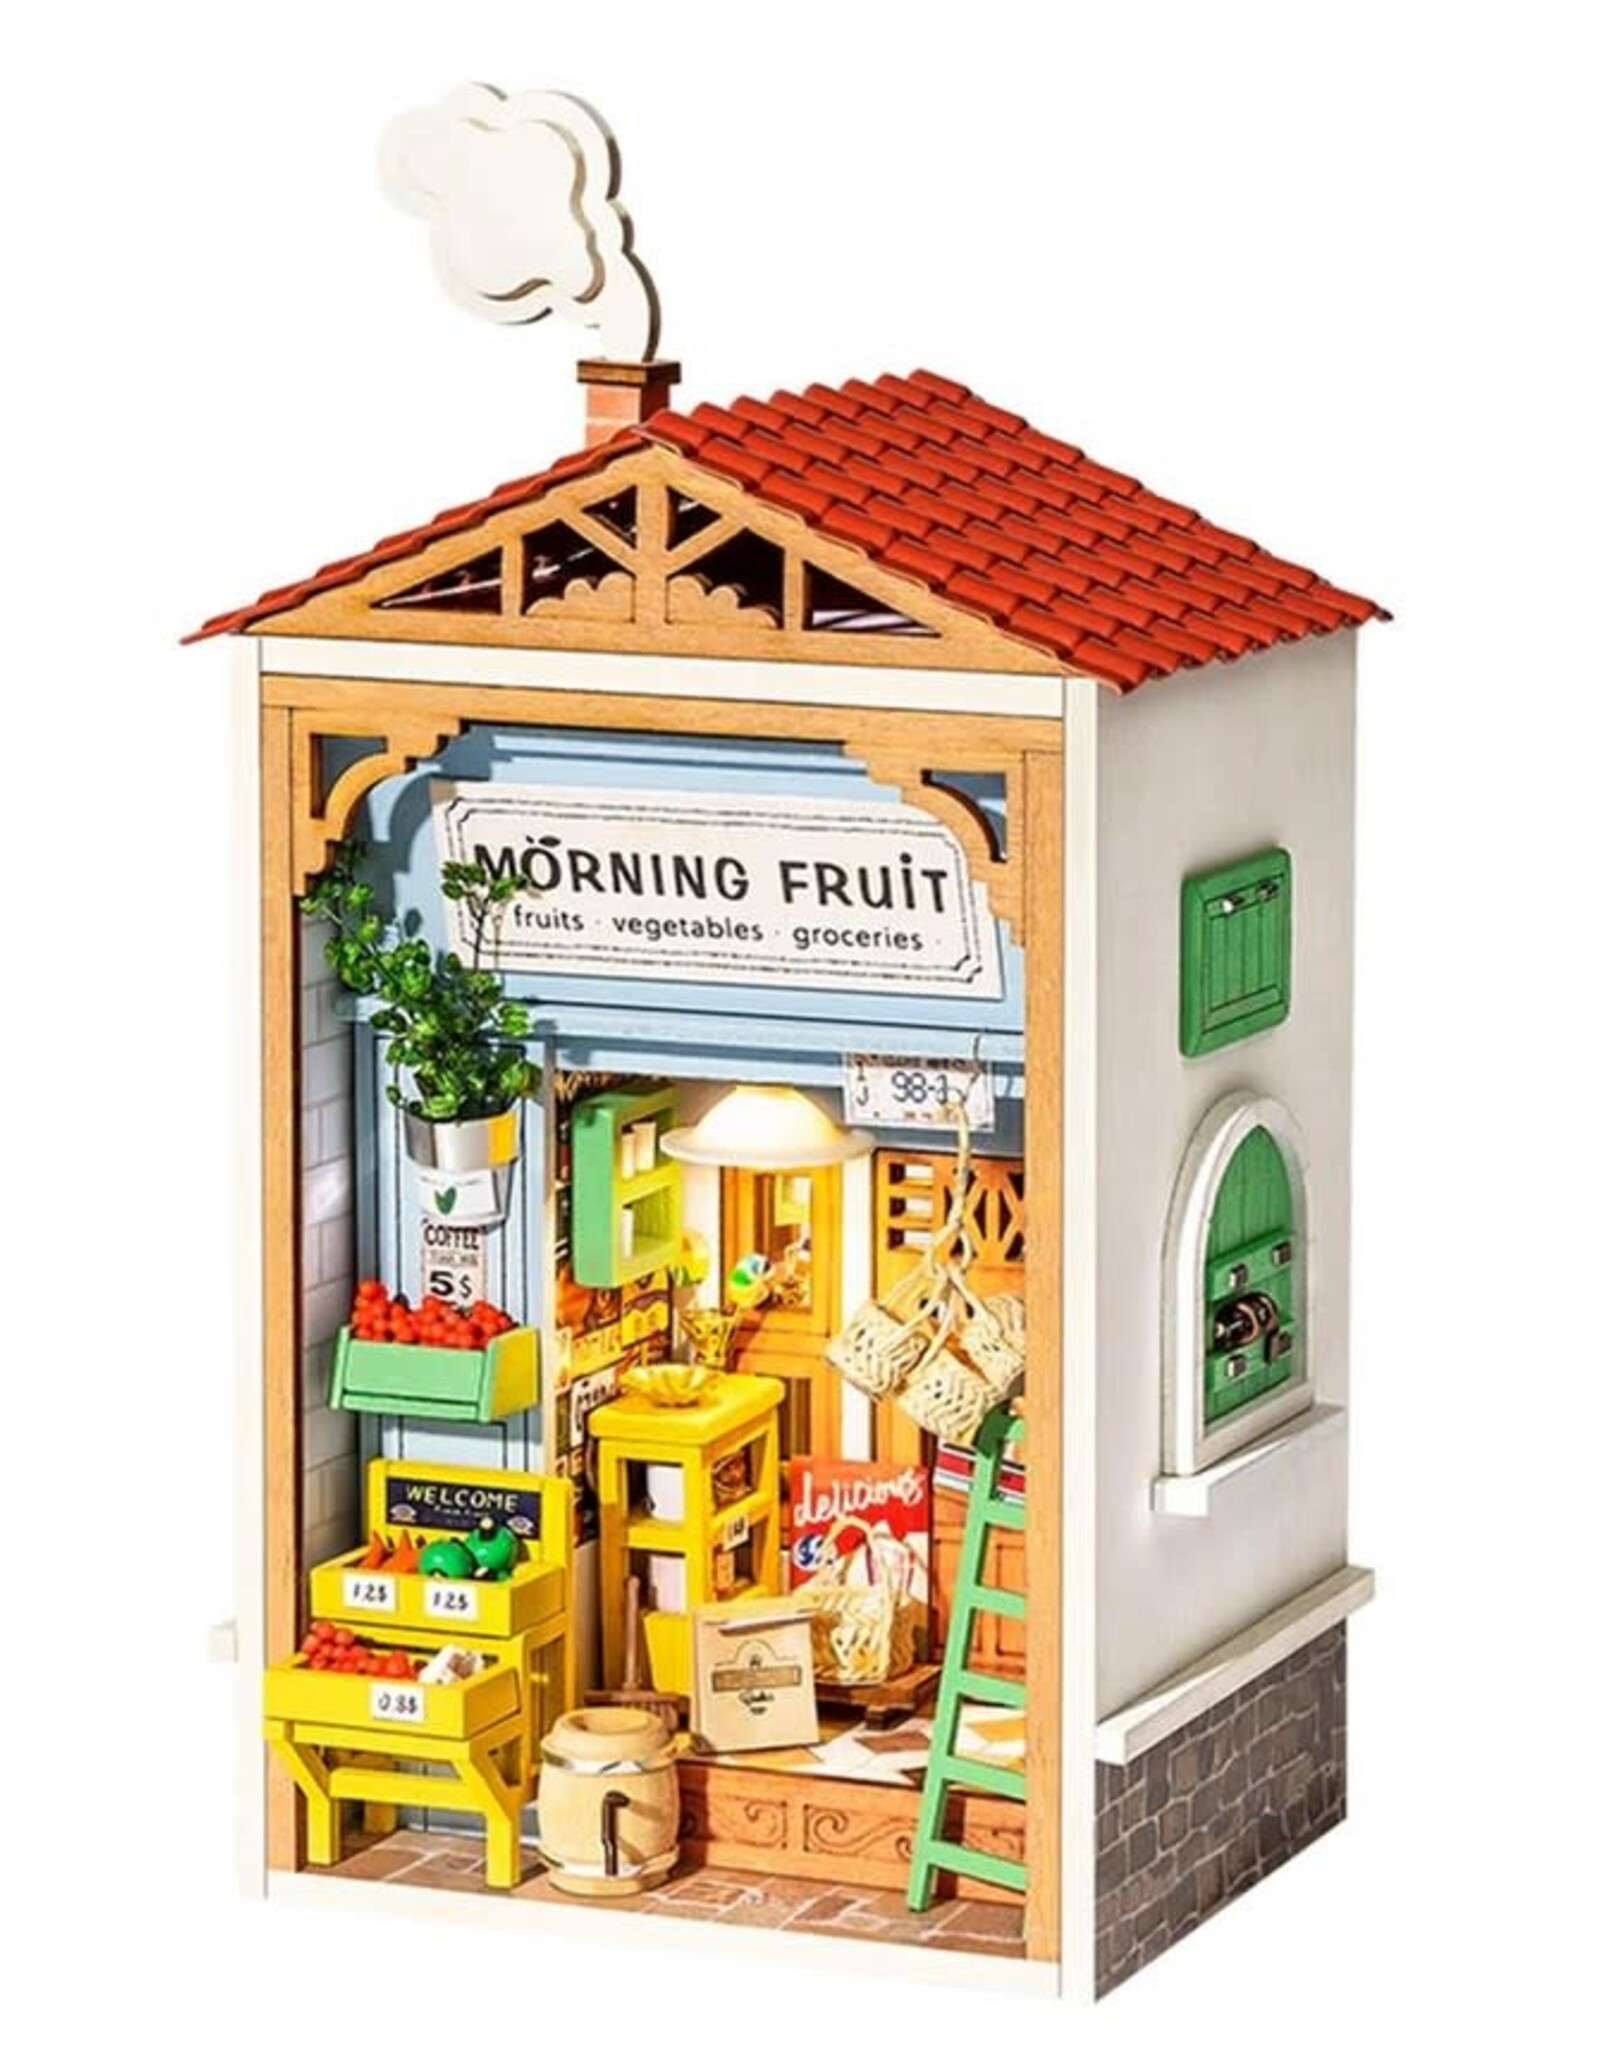 Hands Craft US Inc DIY Miniature Store Kit : Morning Fruit